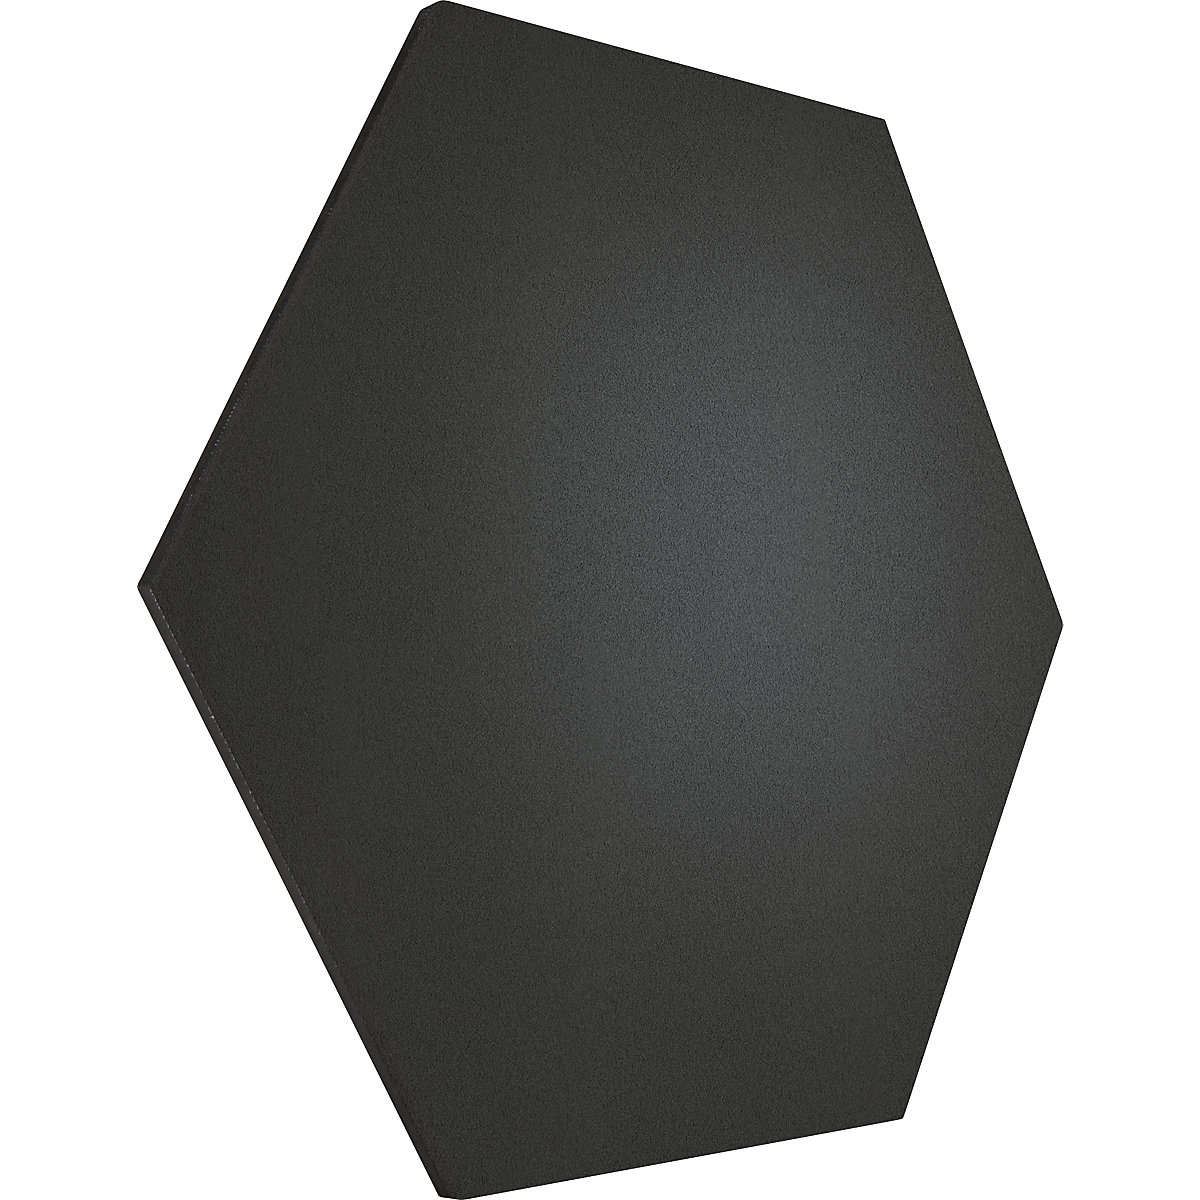 Design-Pinnwand sechseckig Chameleon, Kork, BxH 600 x 600 mm, schwarz-29